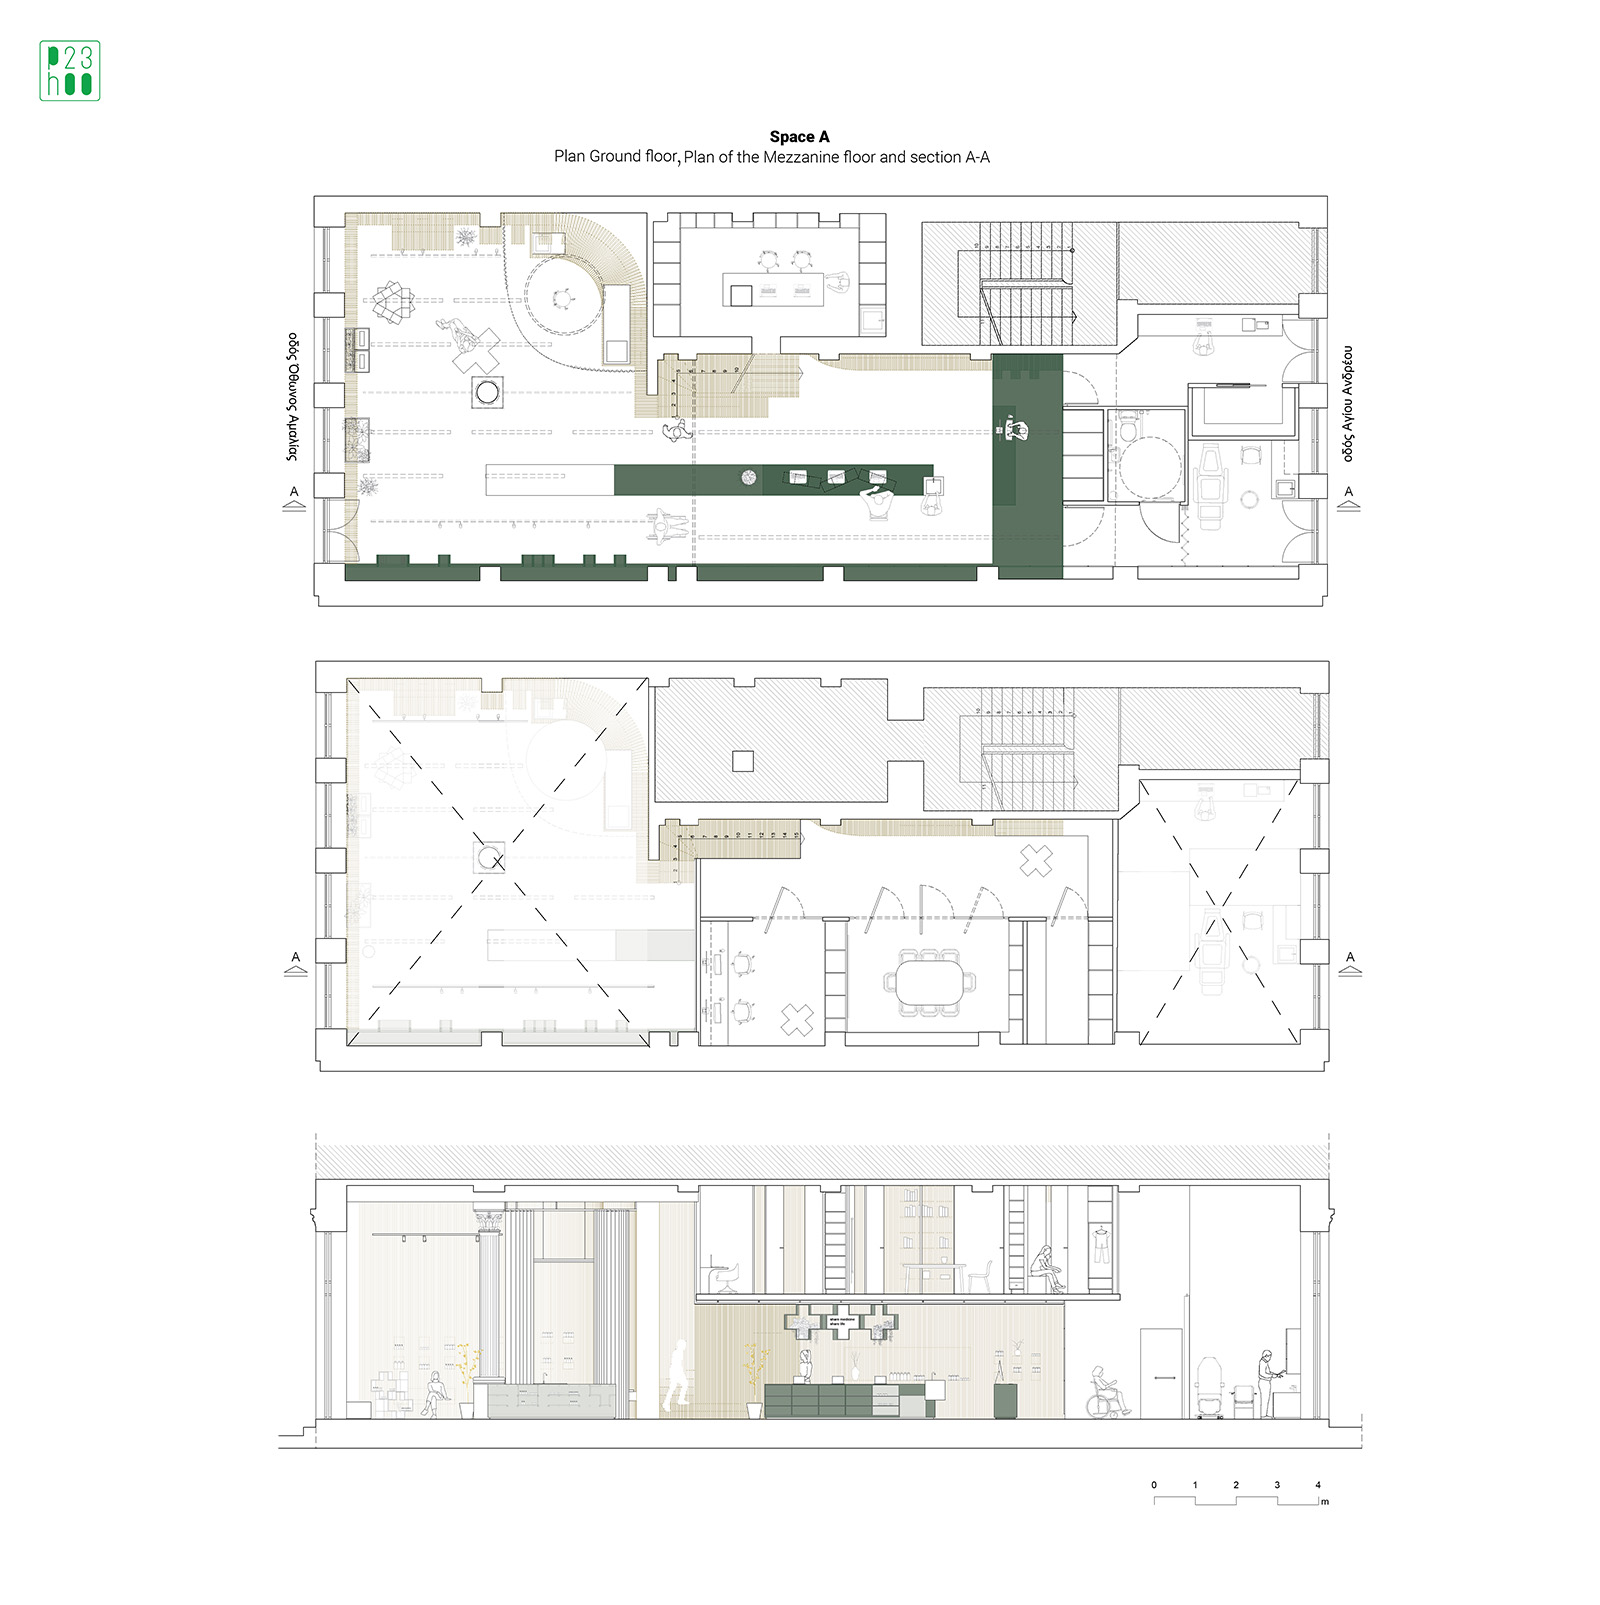 Archisearch Α’ ΒΡΑΒΕΙΟ συμμετοχής στο Φοιτητικό Αρχιτεκτονικό Διαγωνισμό Ιδεών «Φαρμακείο 2030», απέσπασε η πρόταση των Δήμητρα Καδά, Ασημίνα Ιωάννα Σαμπάνη, Χρήστο Μπάκνη